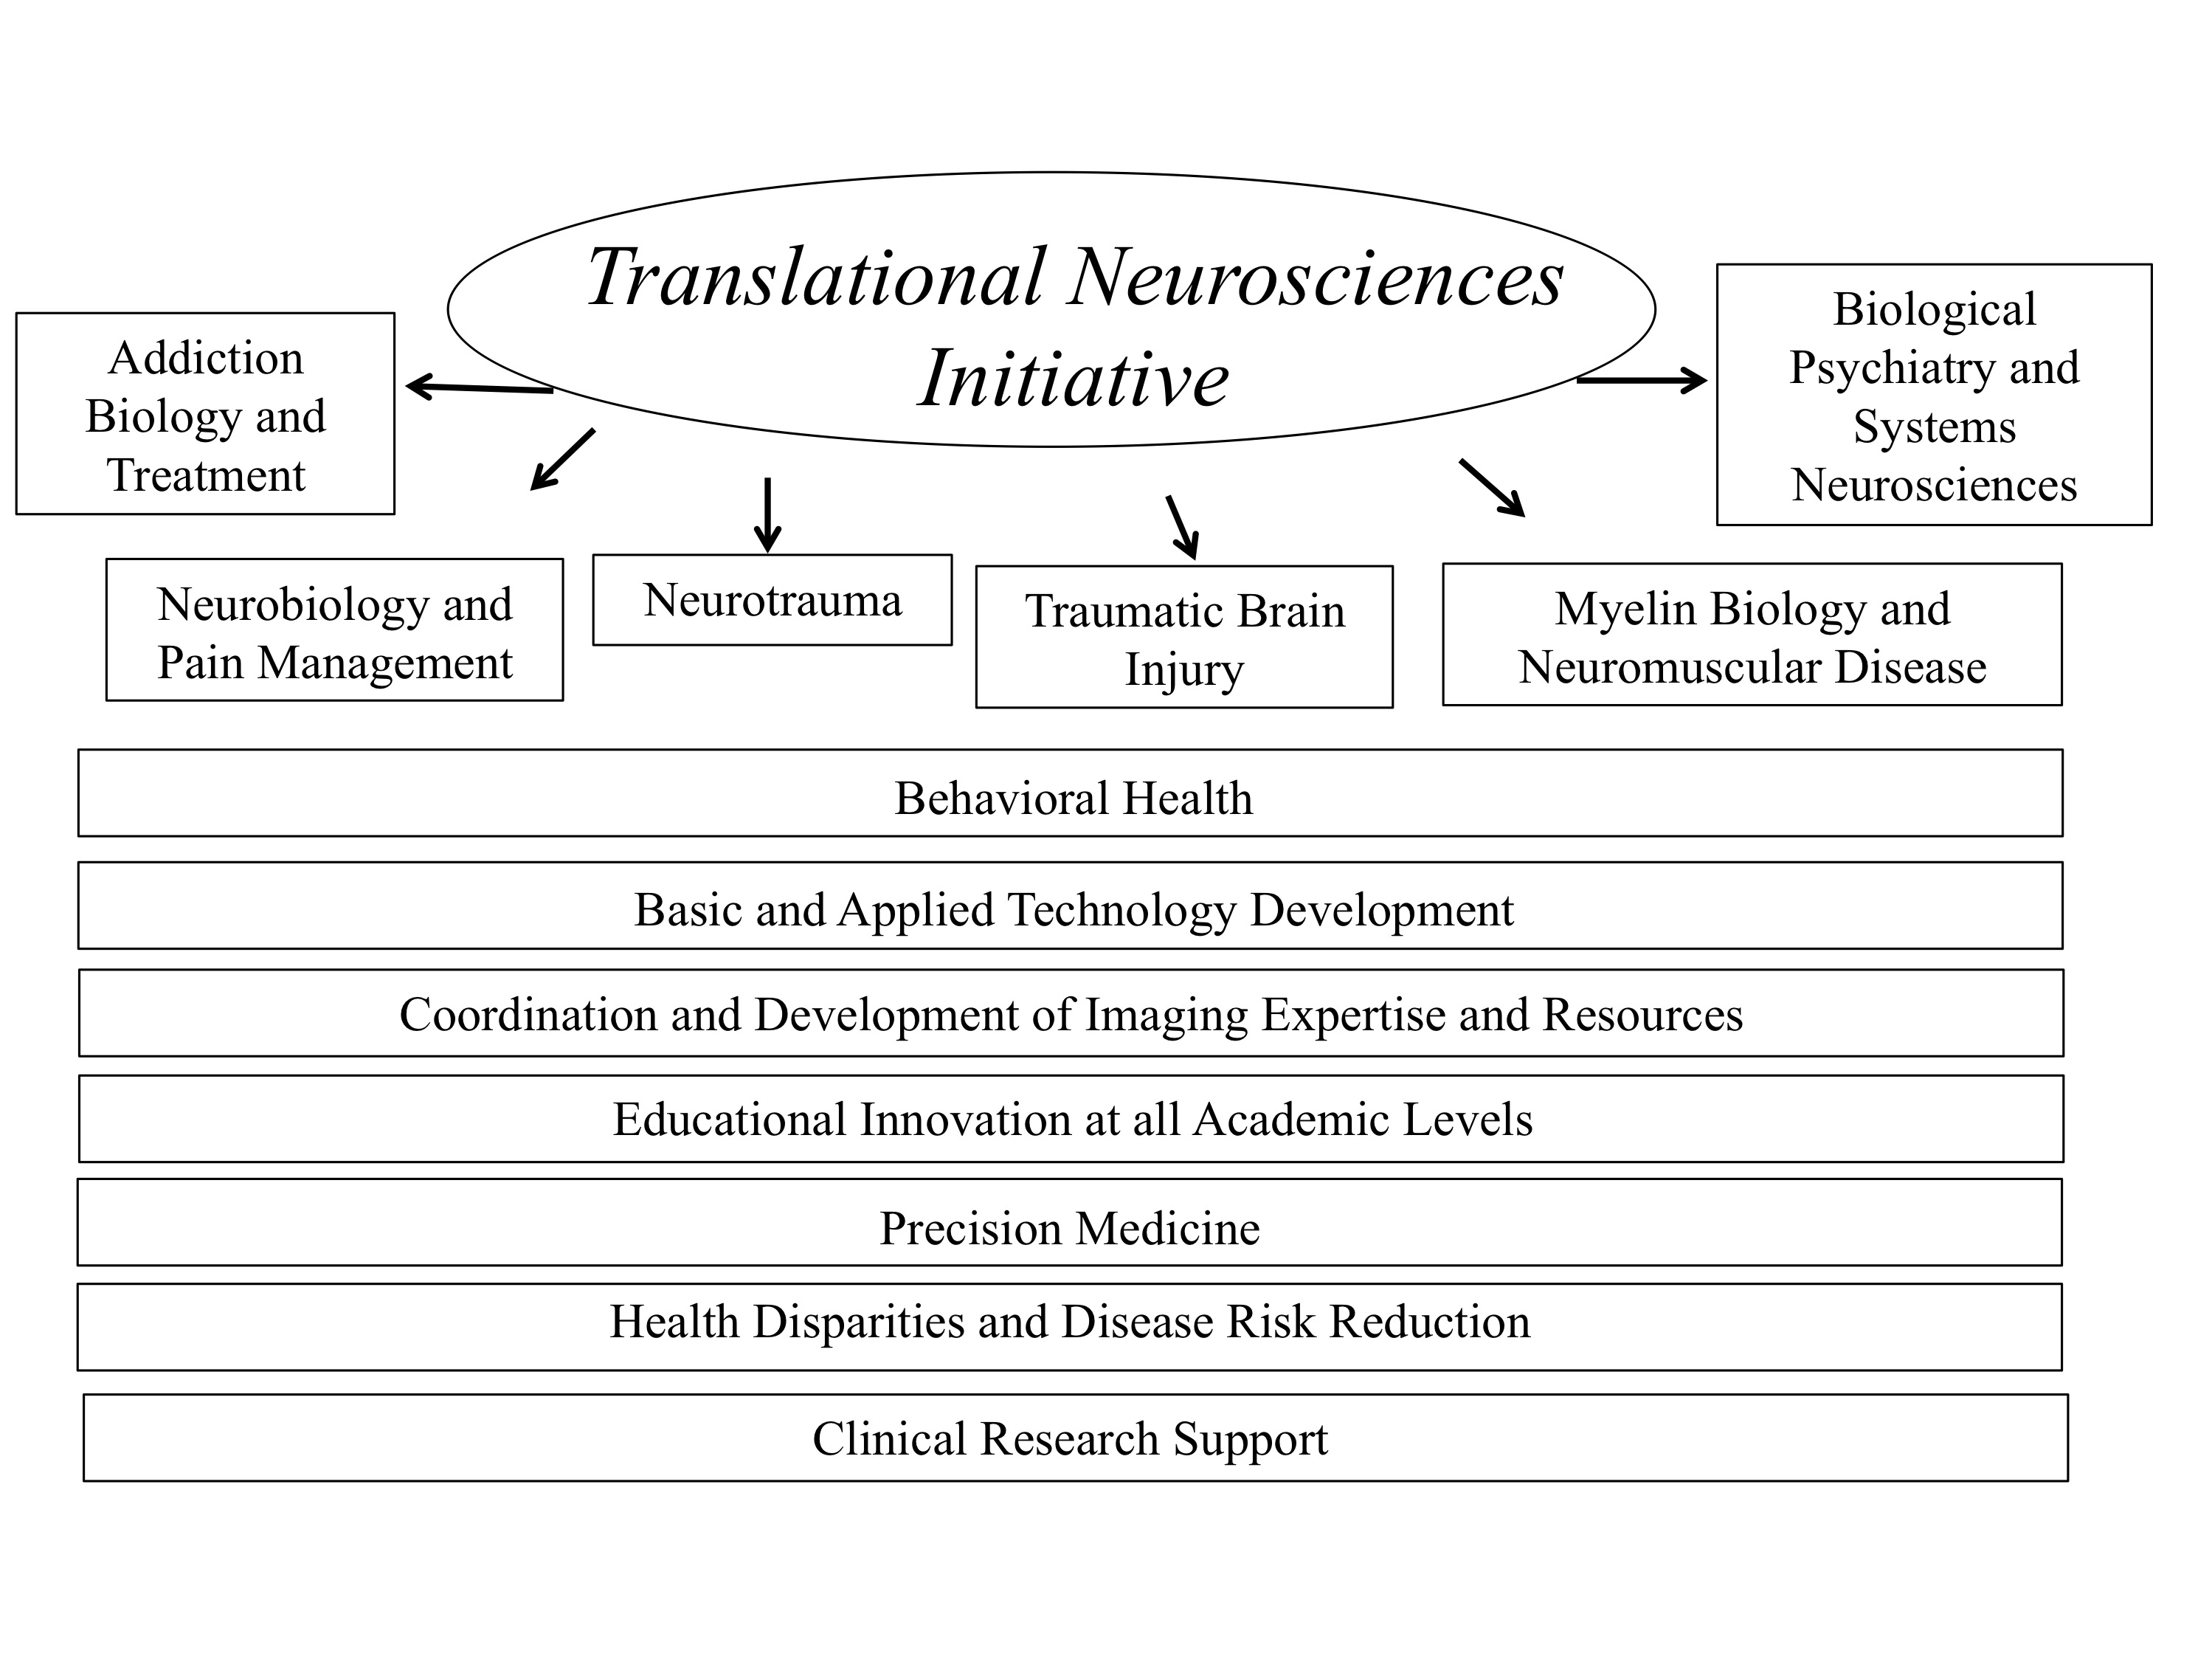 Translational Neurosciences Initiative Schematic